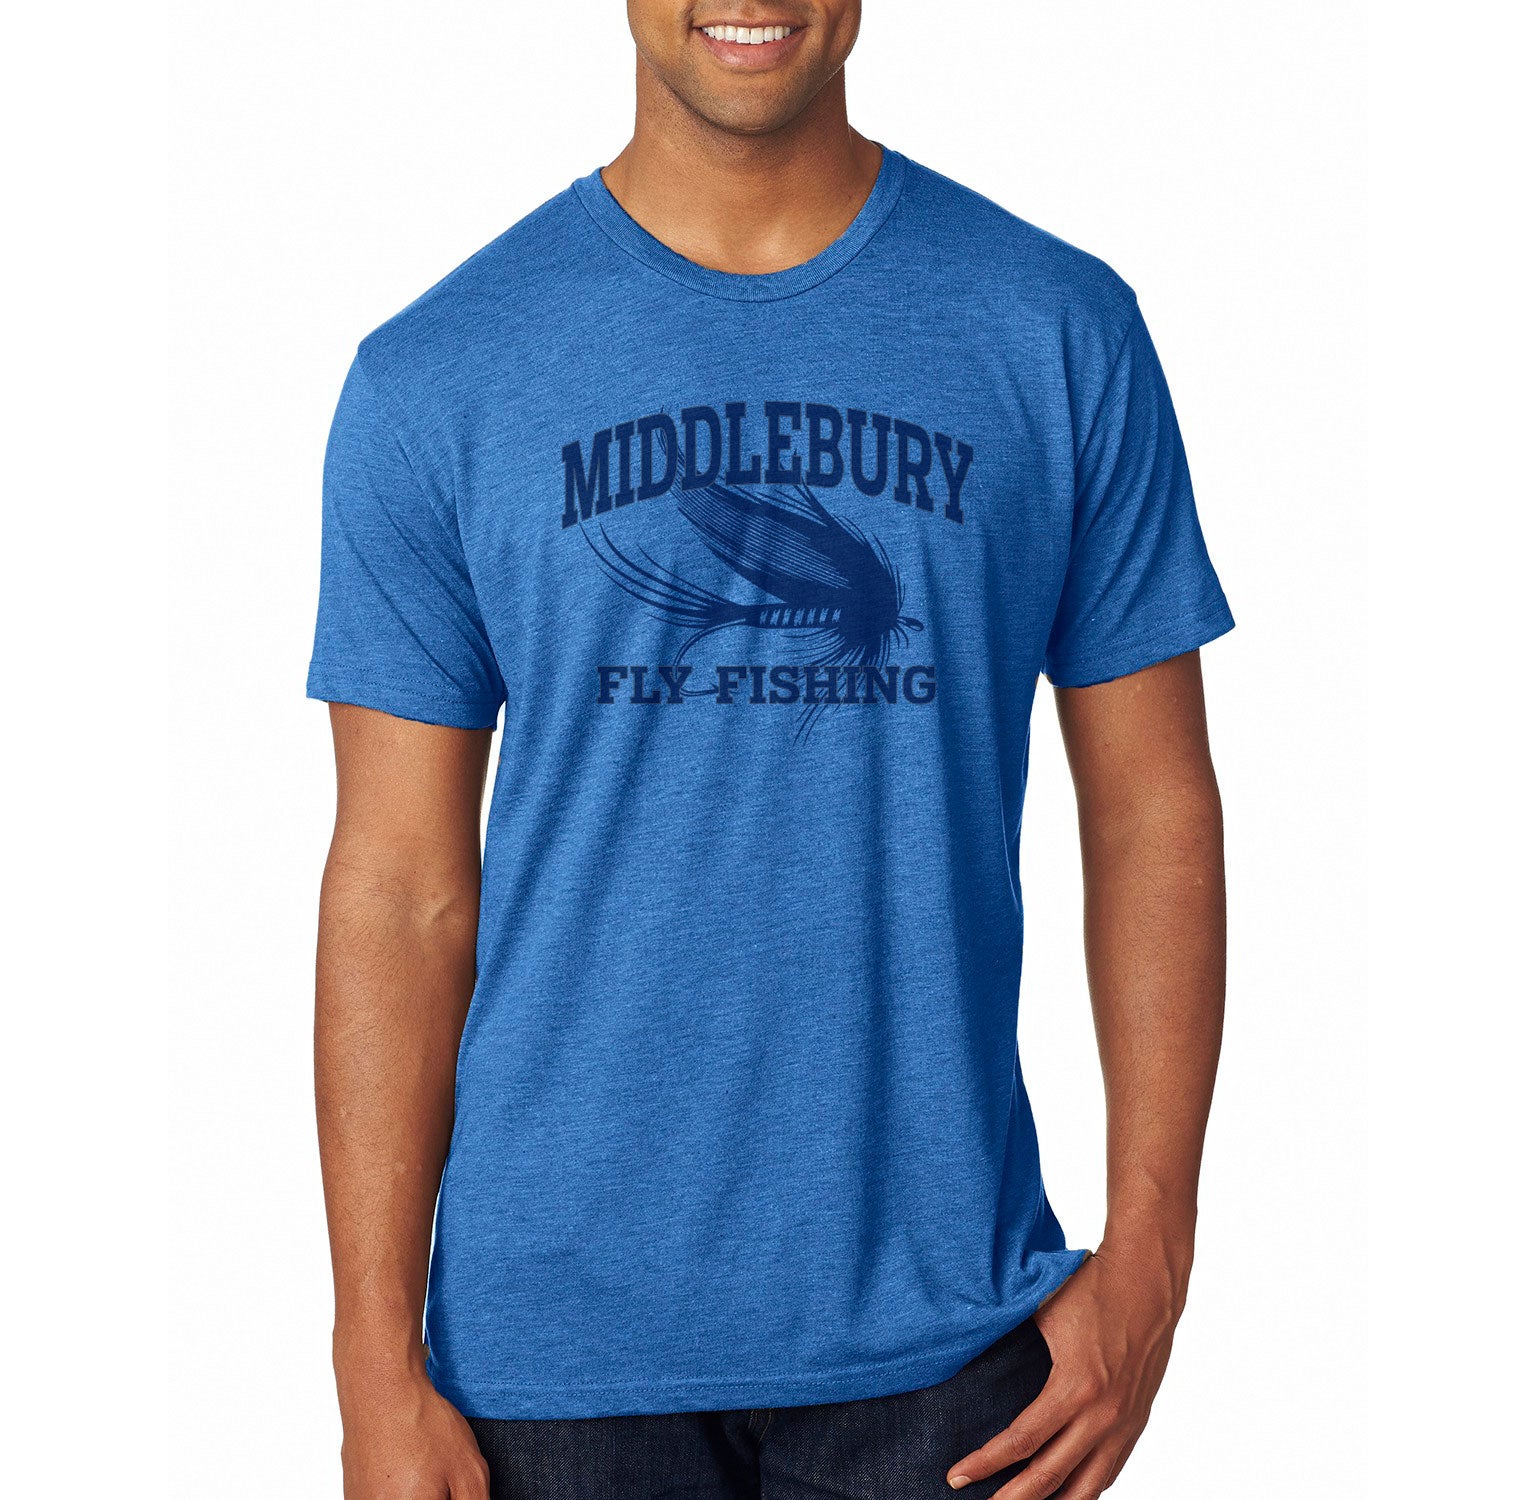 Middlebury Fly Fishing T-Shirt (Vintage Royal)